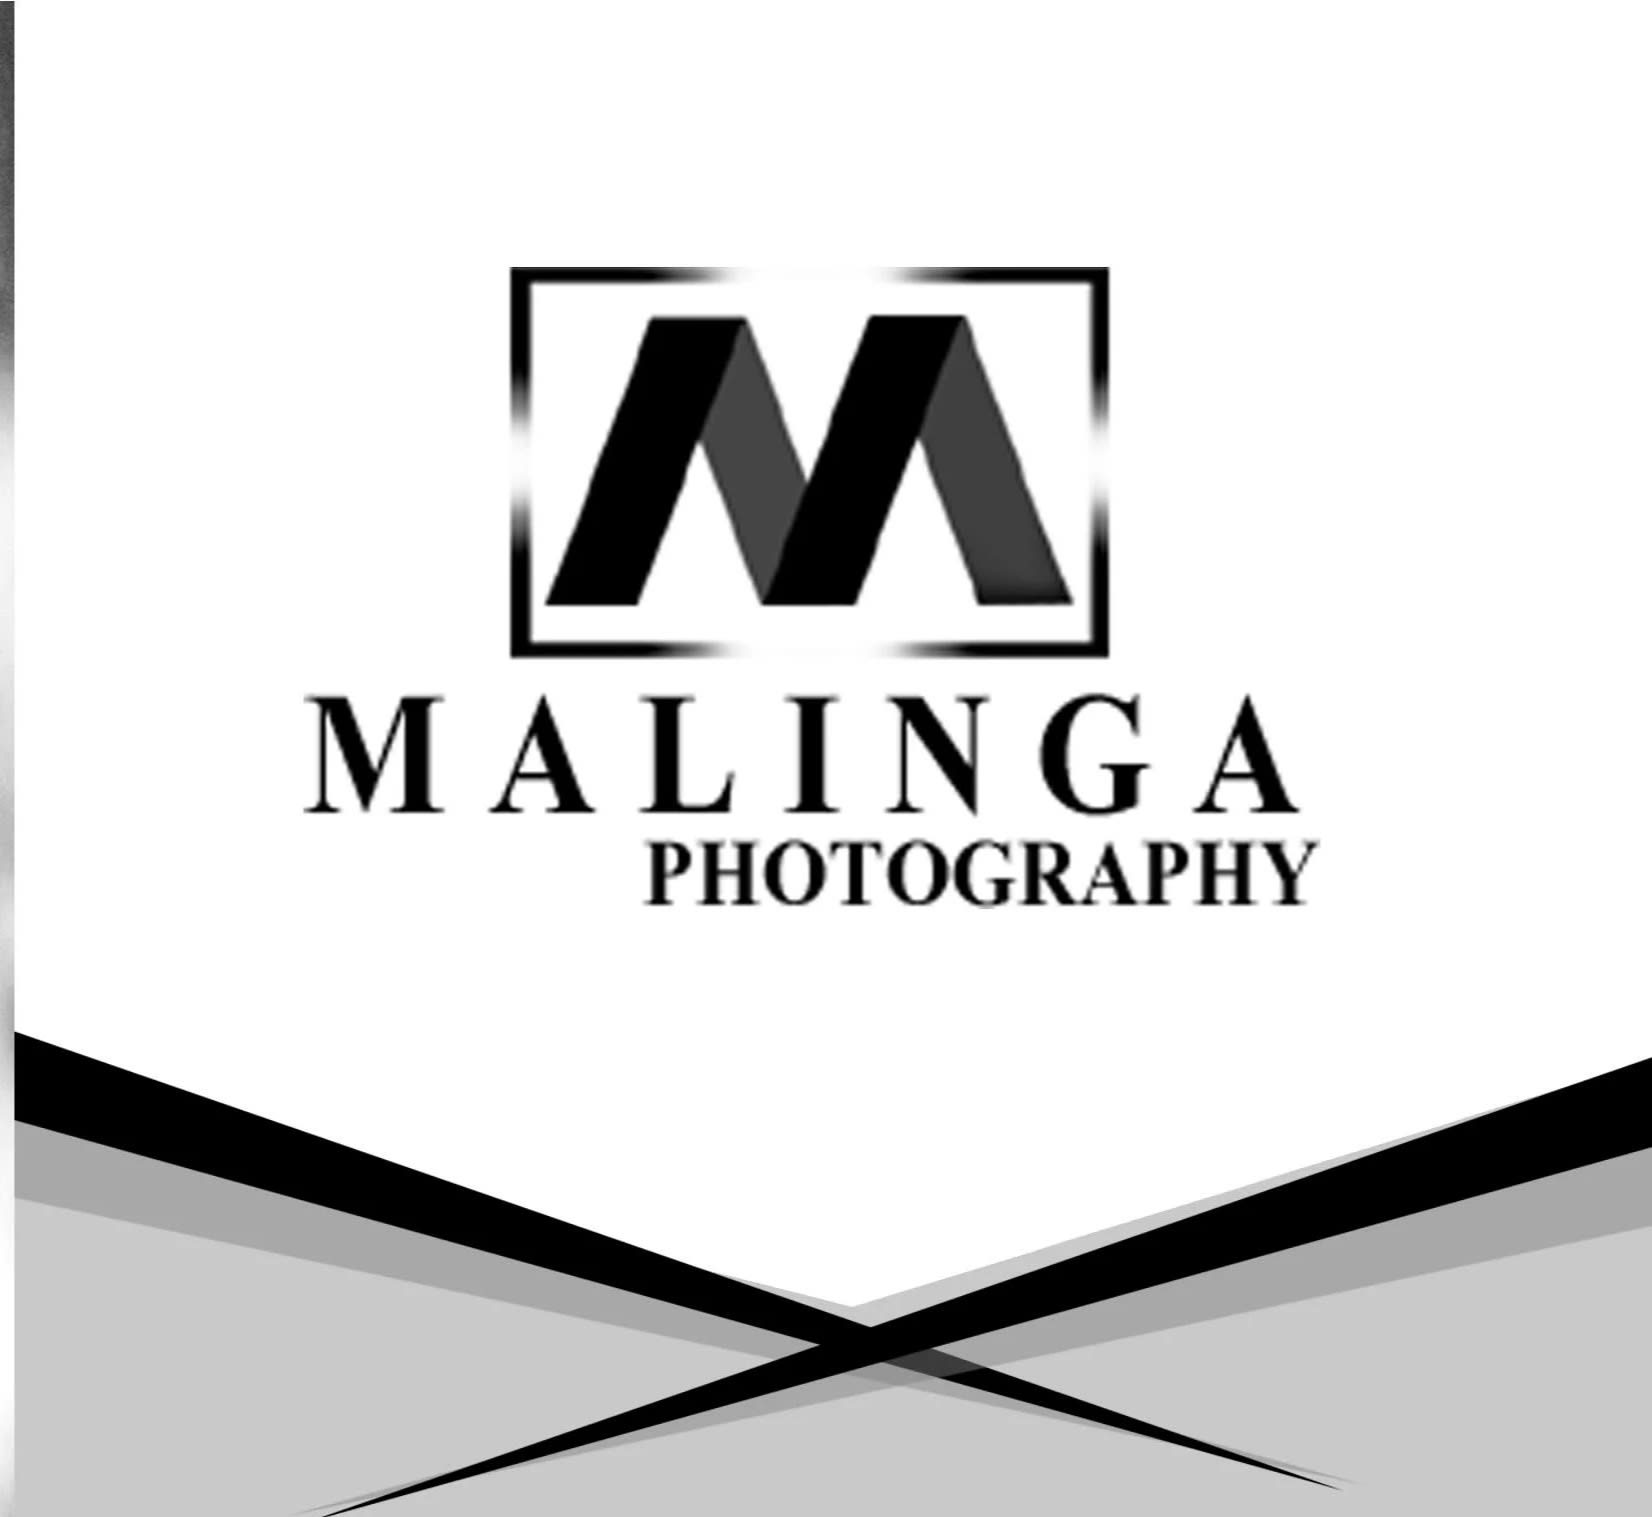 The Malinga Photography